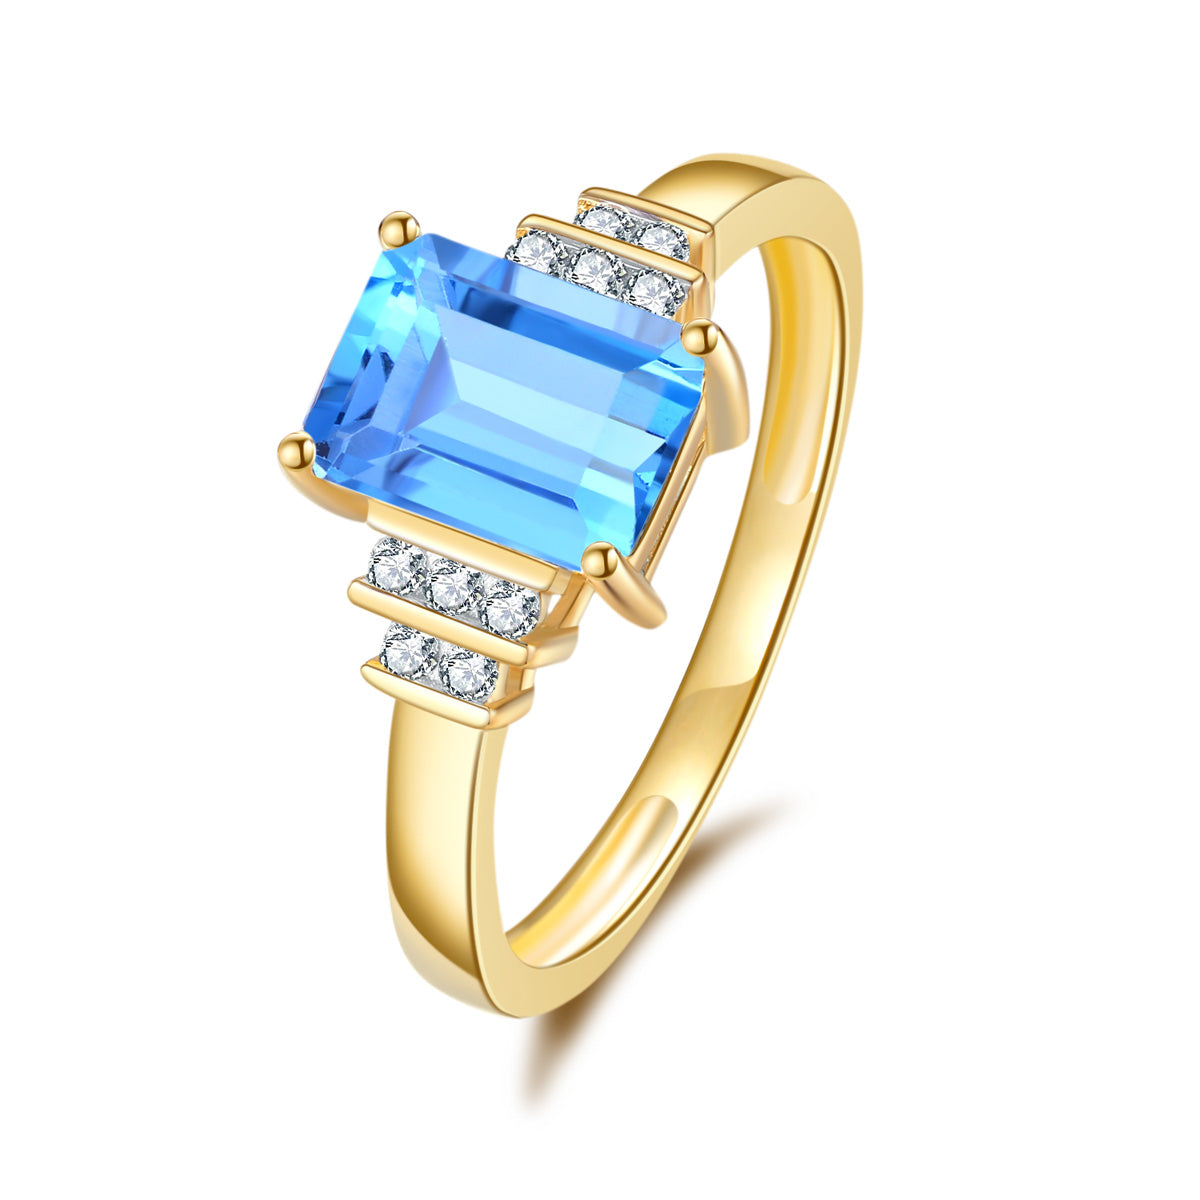 9ct Yellow Gold Blue Topaz & Diamond Ring